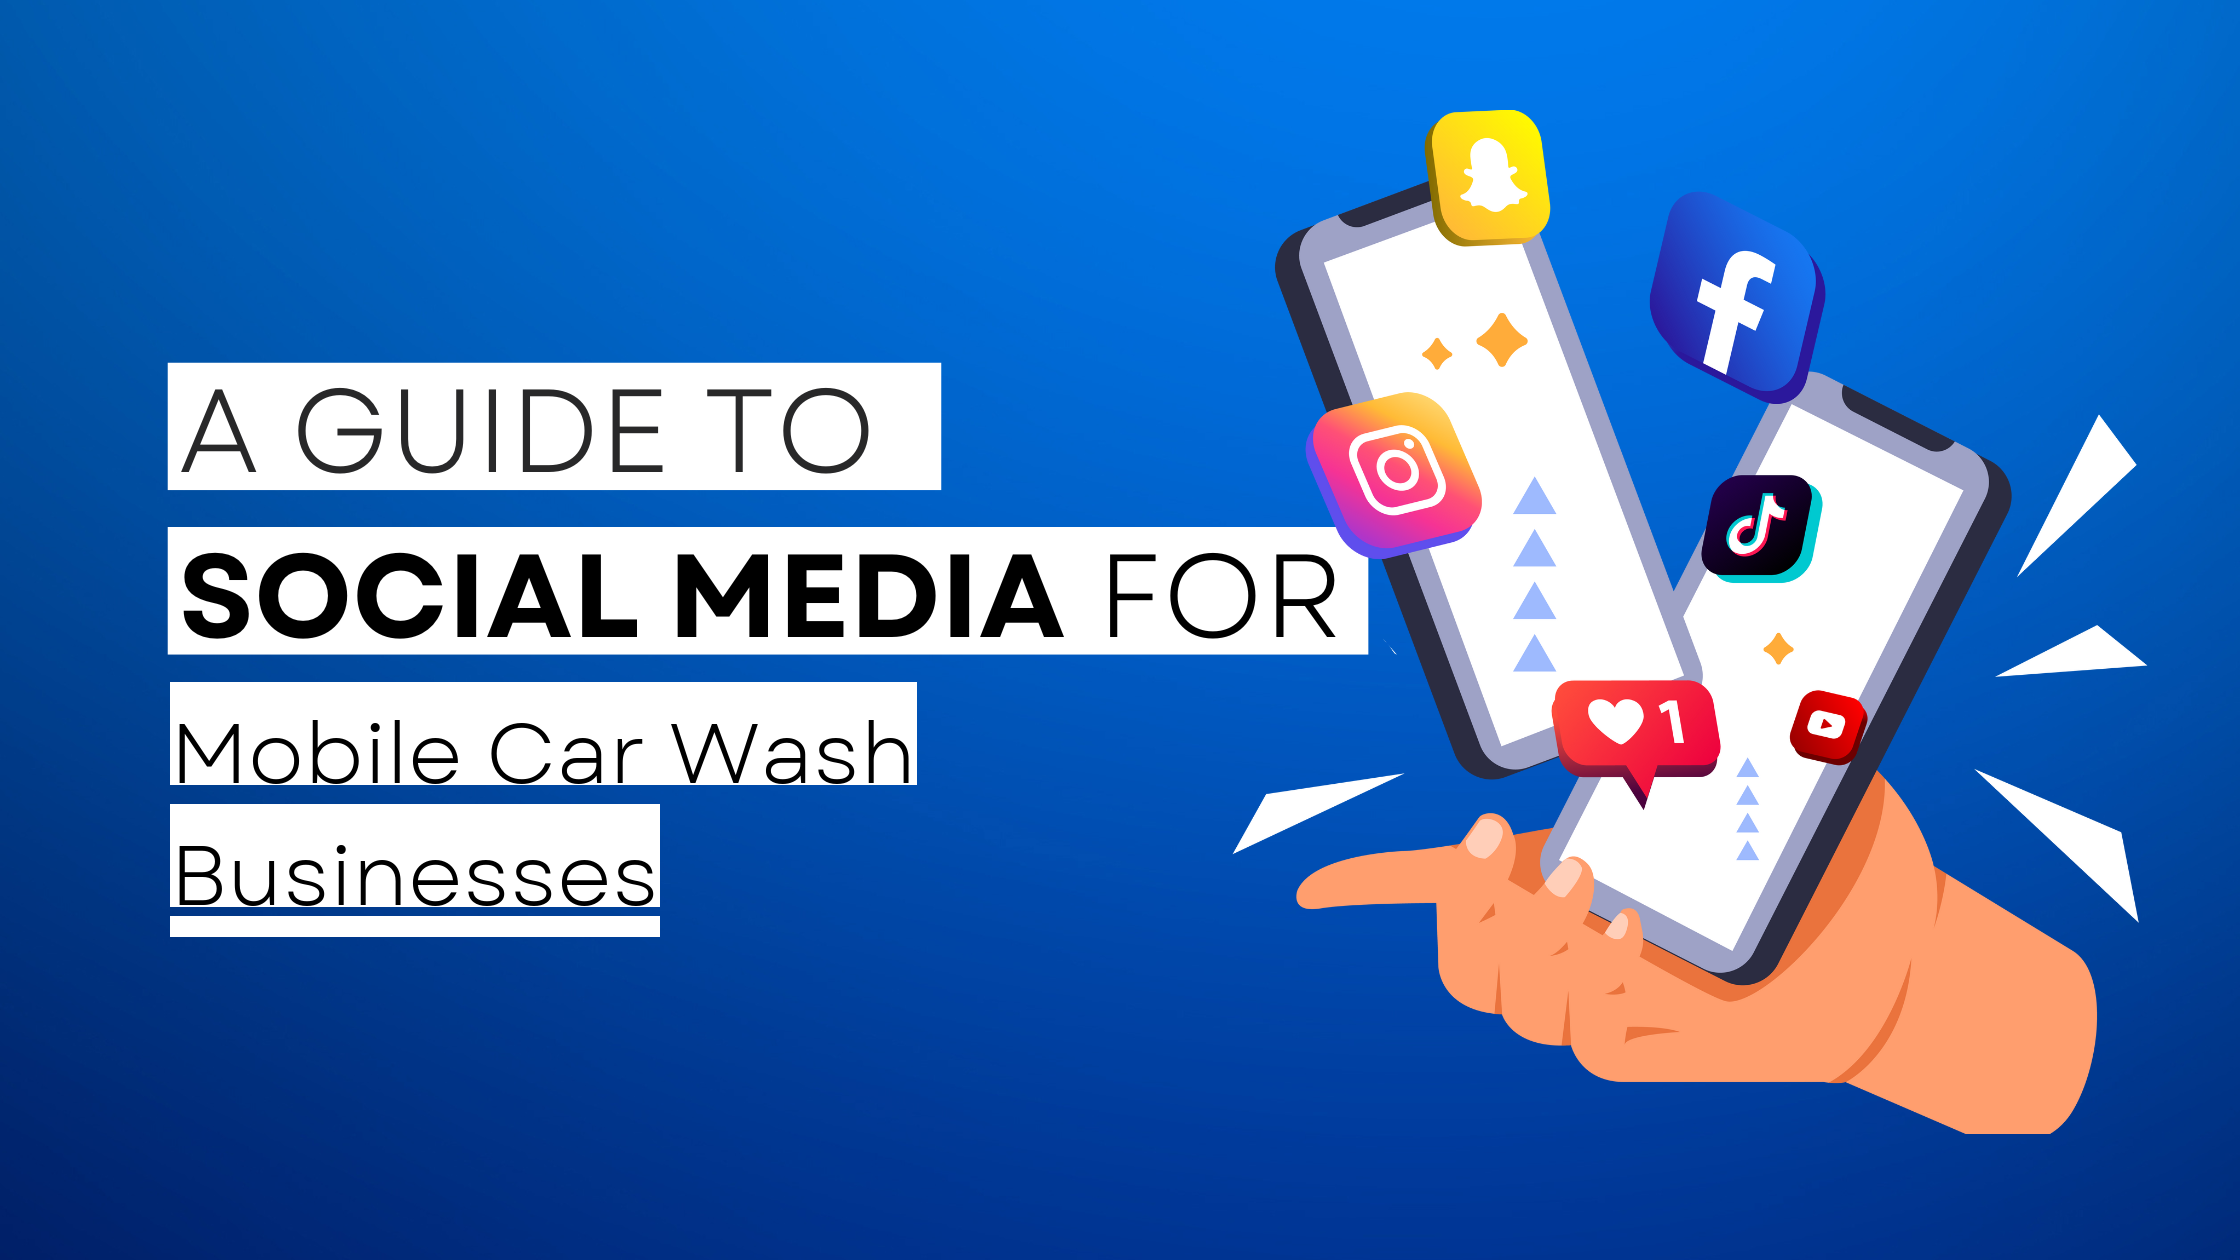 How to start Mobile Car Wash on social media